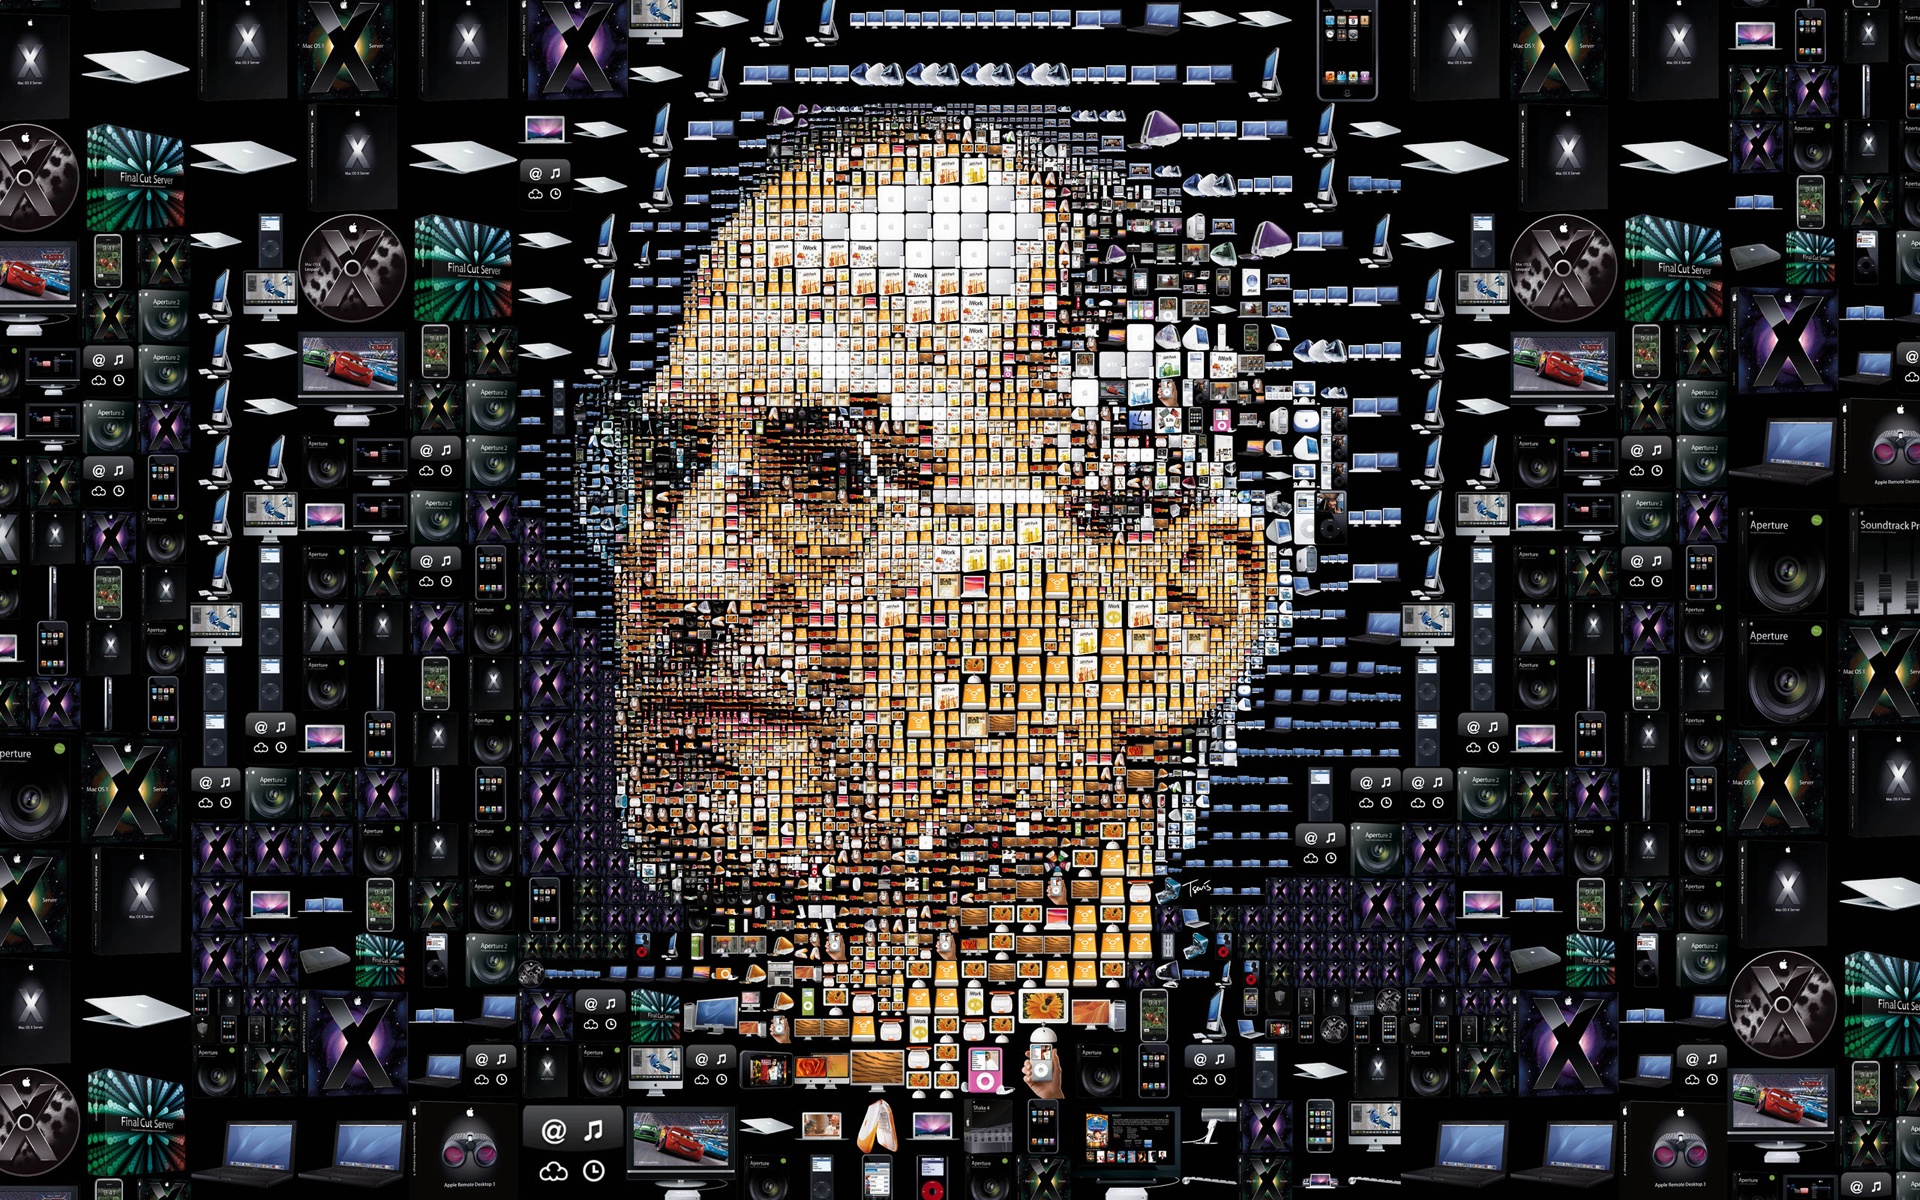 Steve Jobs Memorative Wallpaper HD